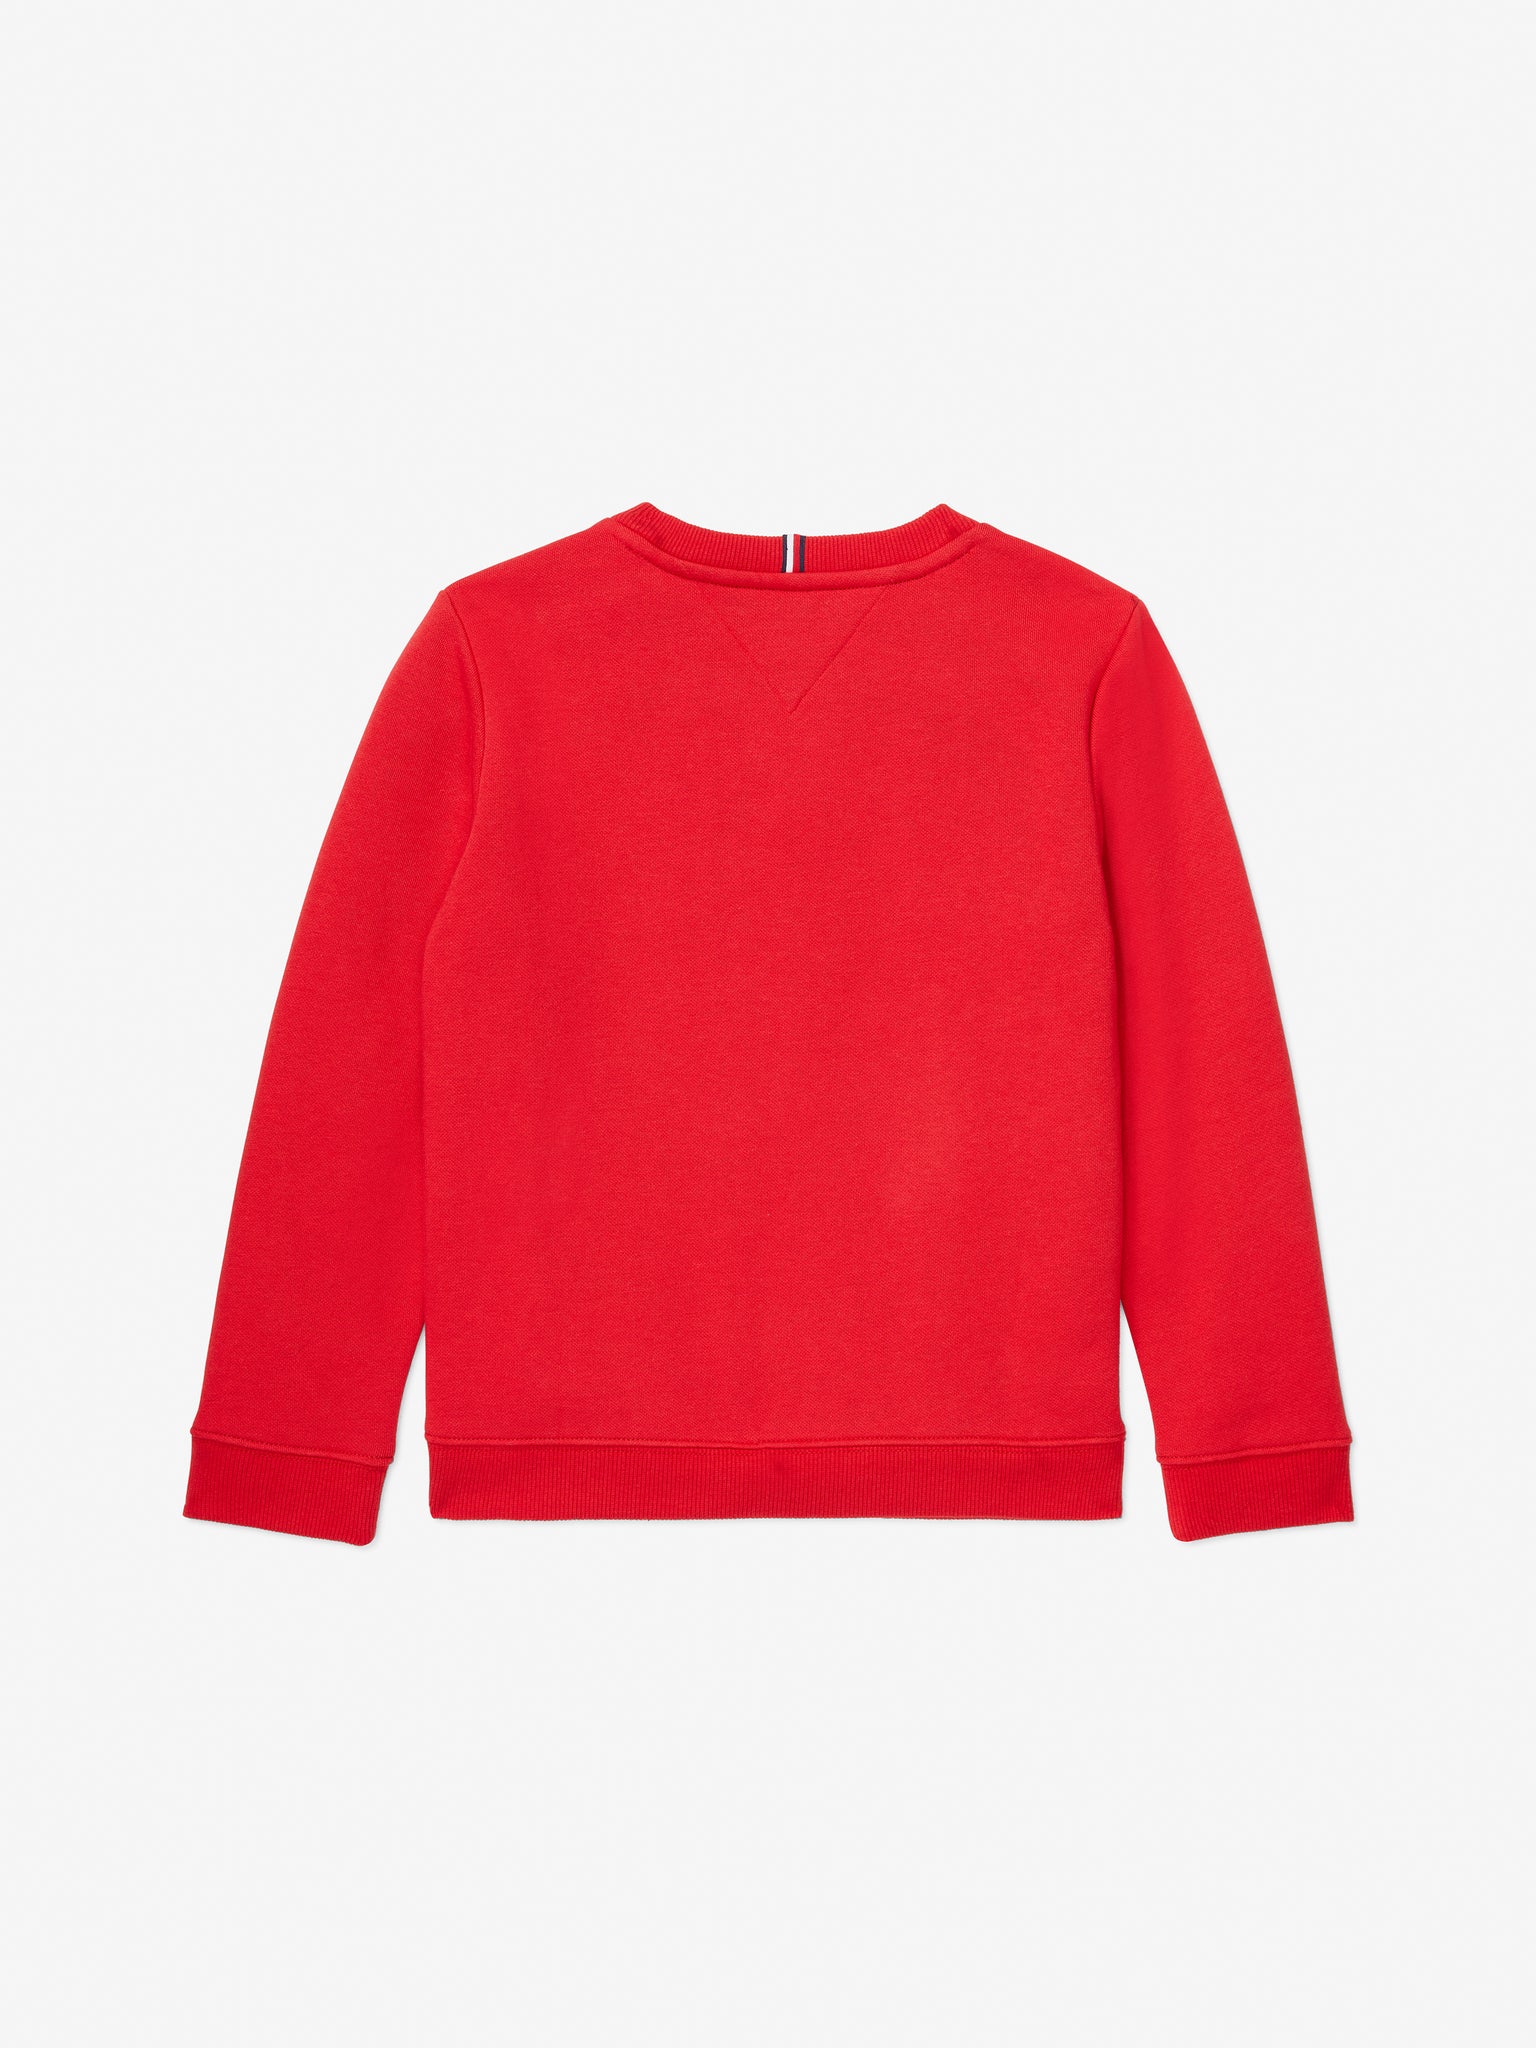 Brandstand Sweatshirt (Kids) - Red